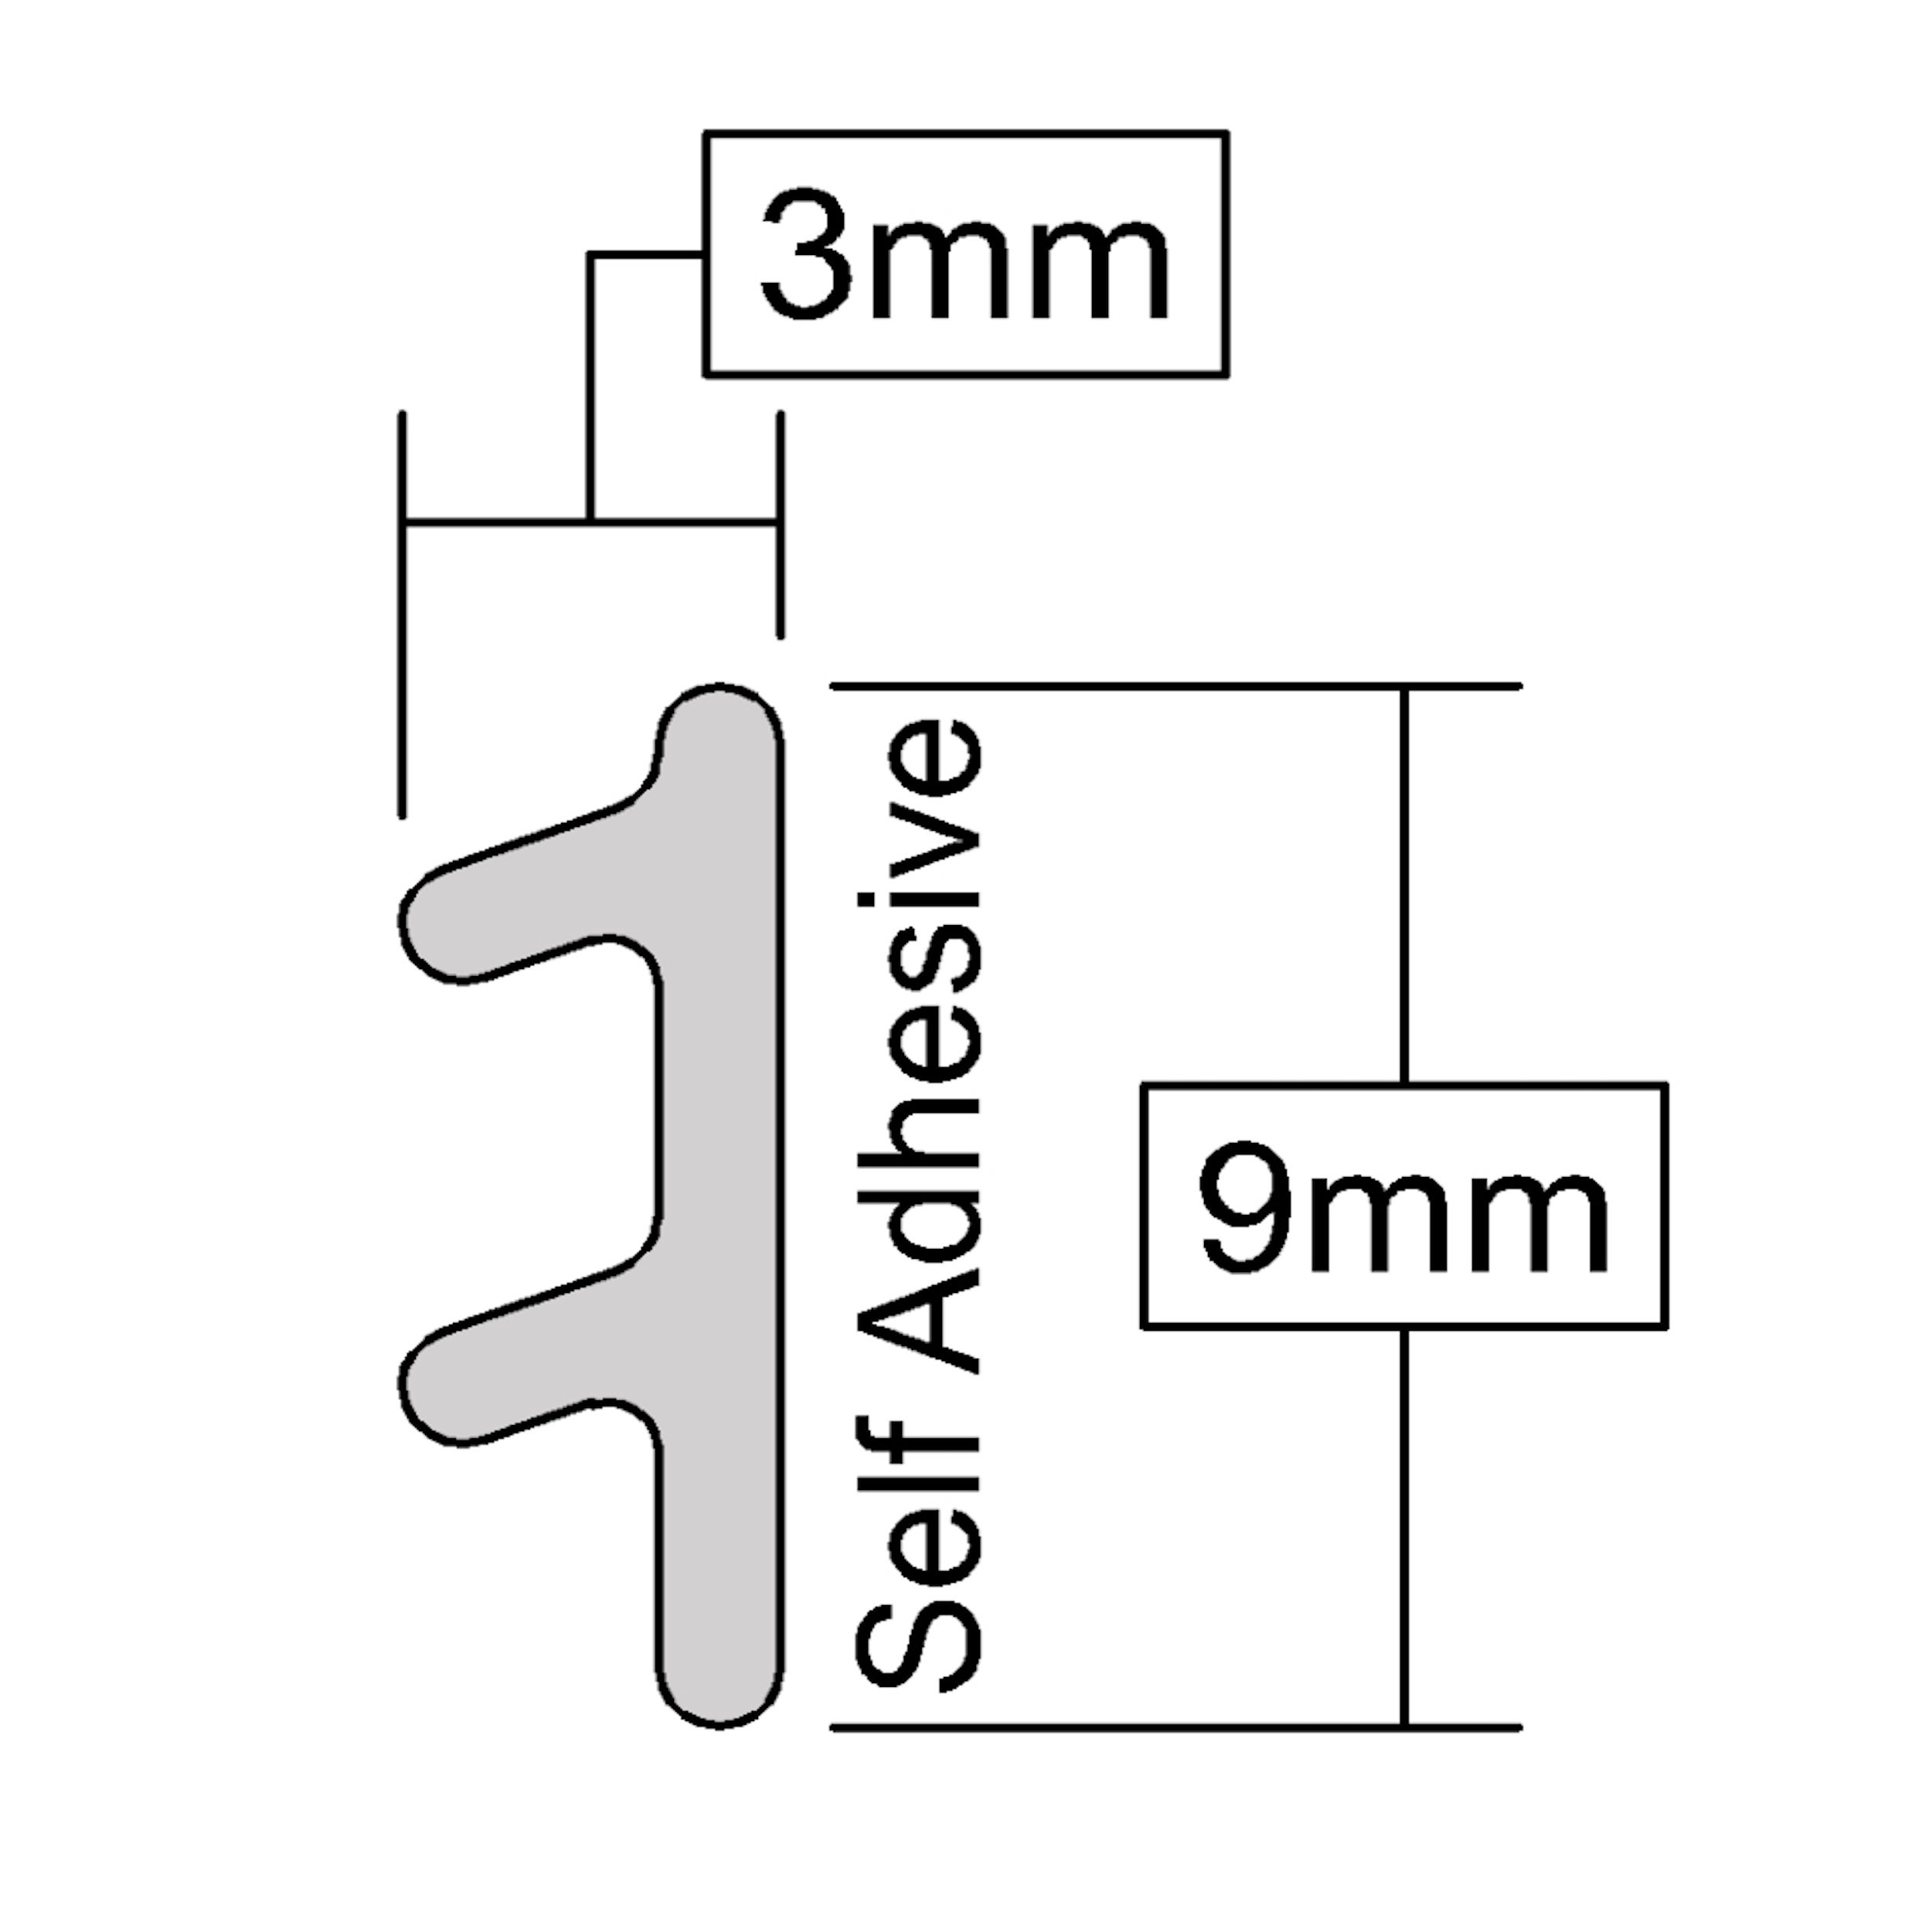 Carousel navigation image position 2 of 4